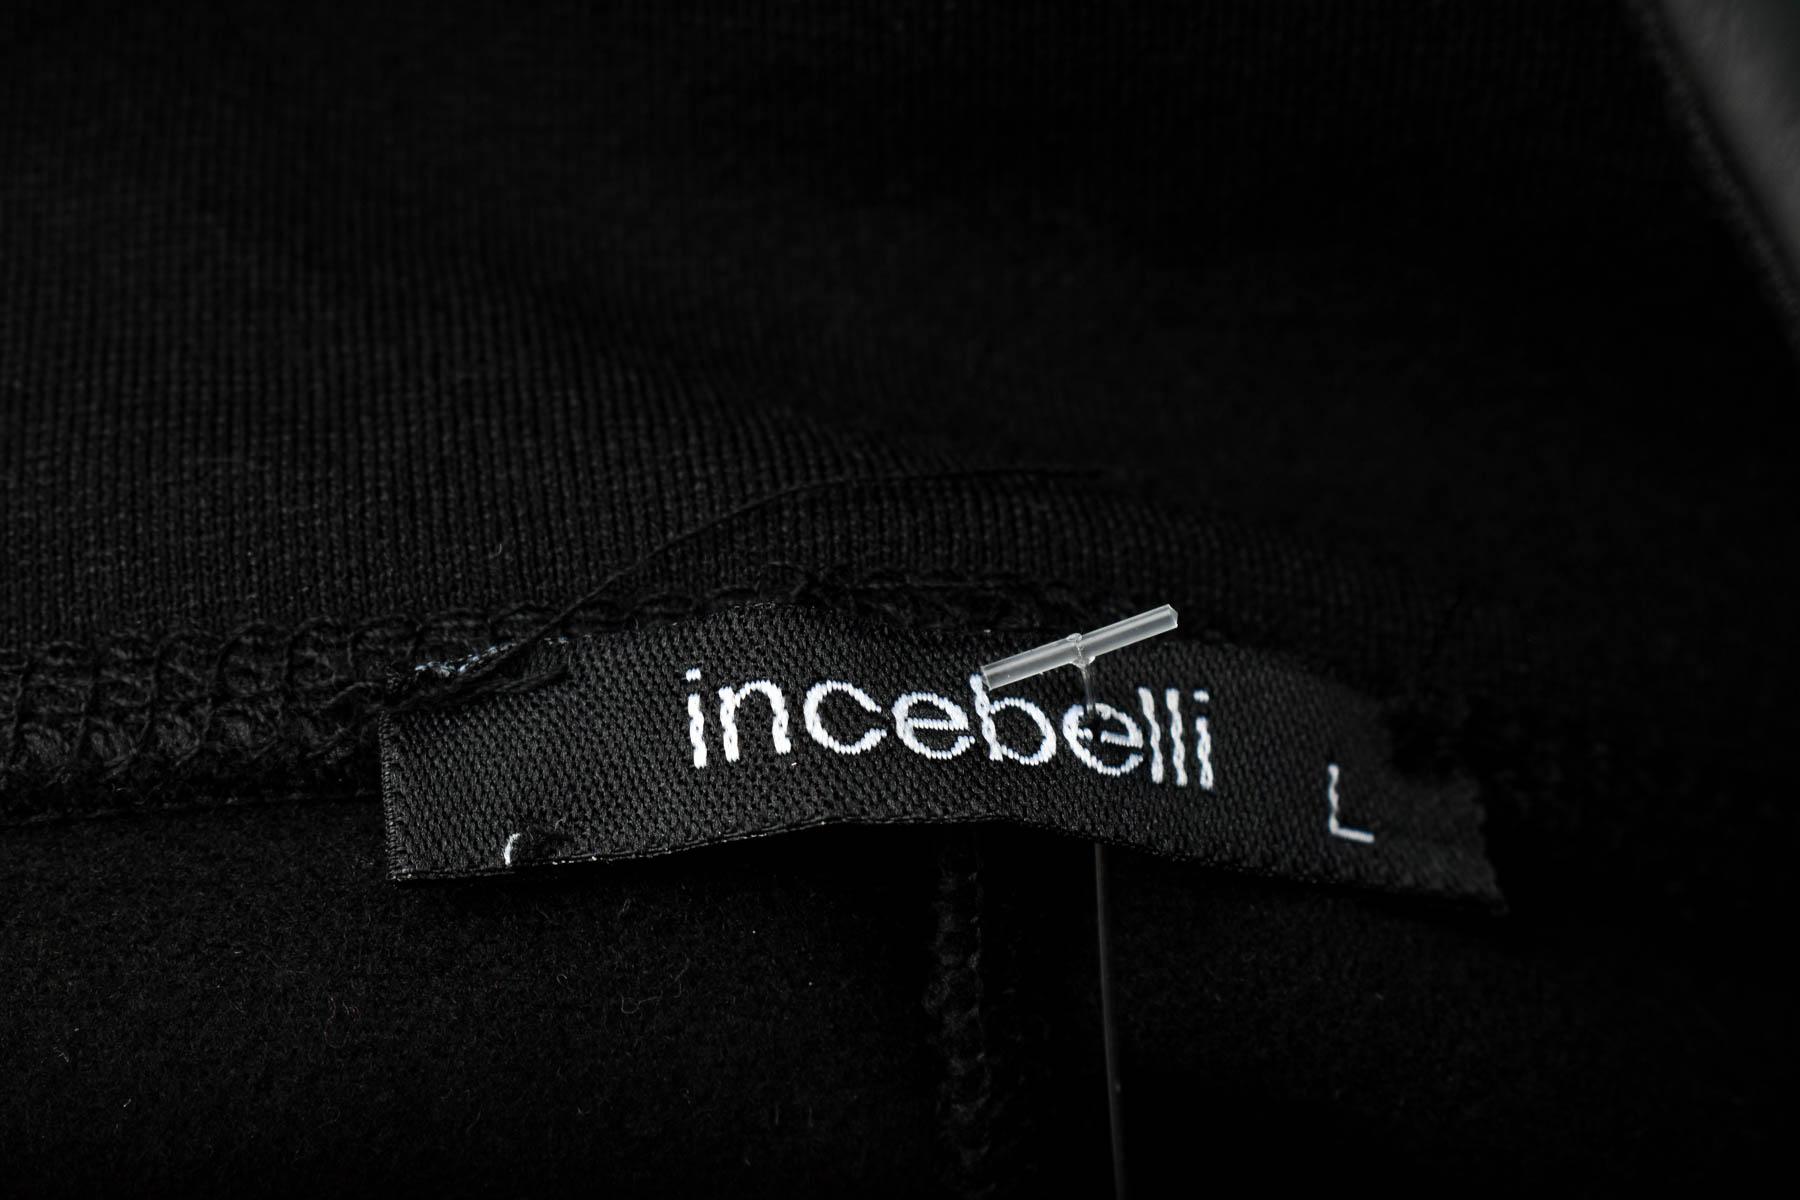 Leather leggings - Incebelli - 2